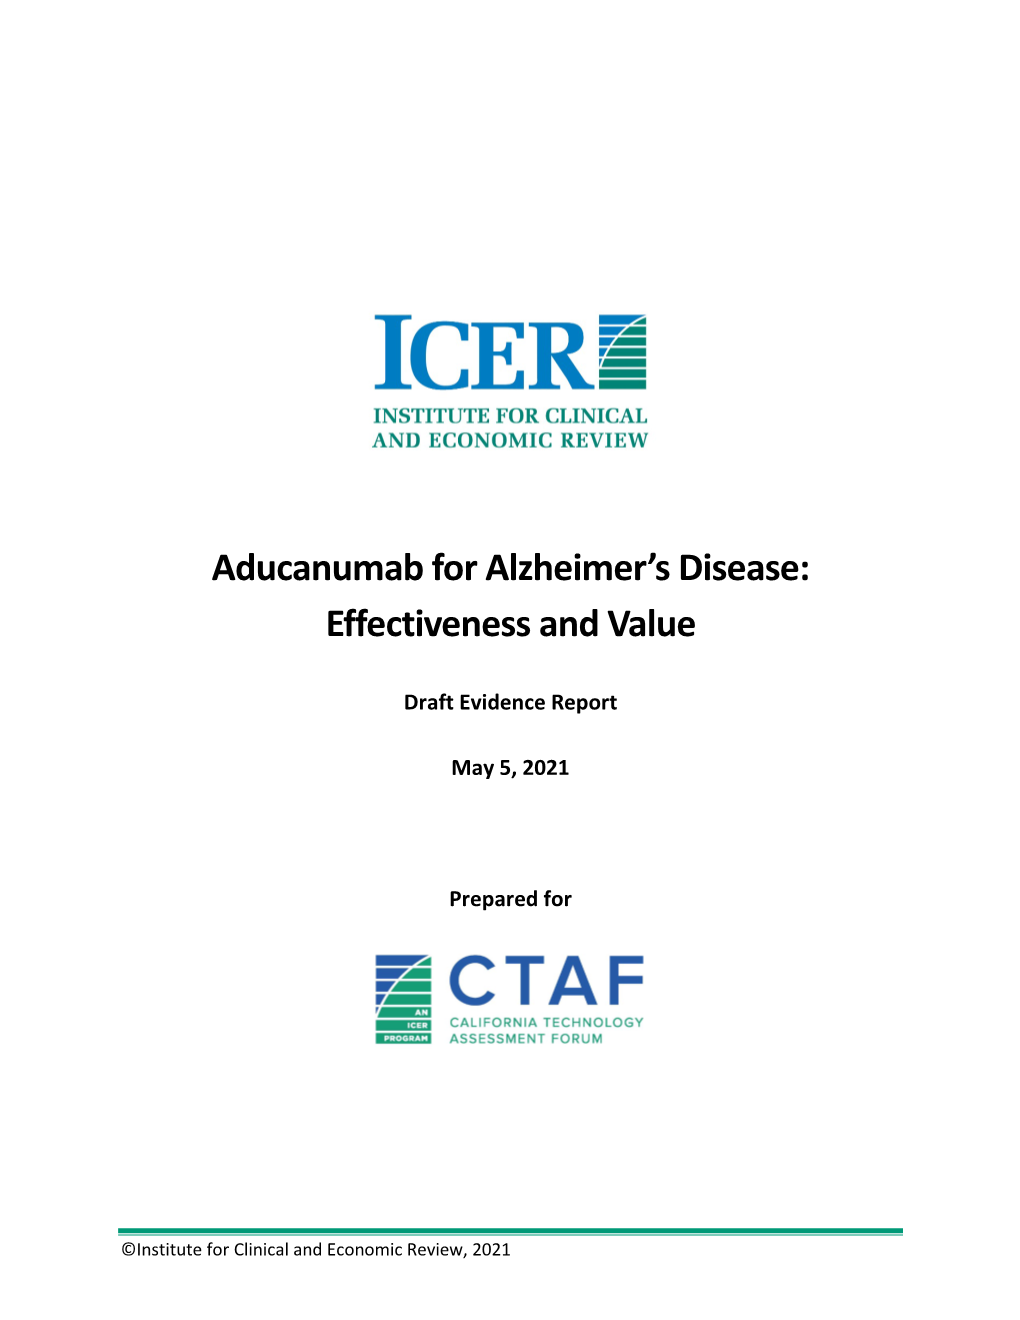 Aducanumab for Alzheimer's Disease